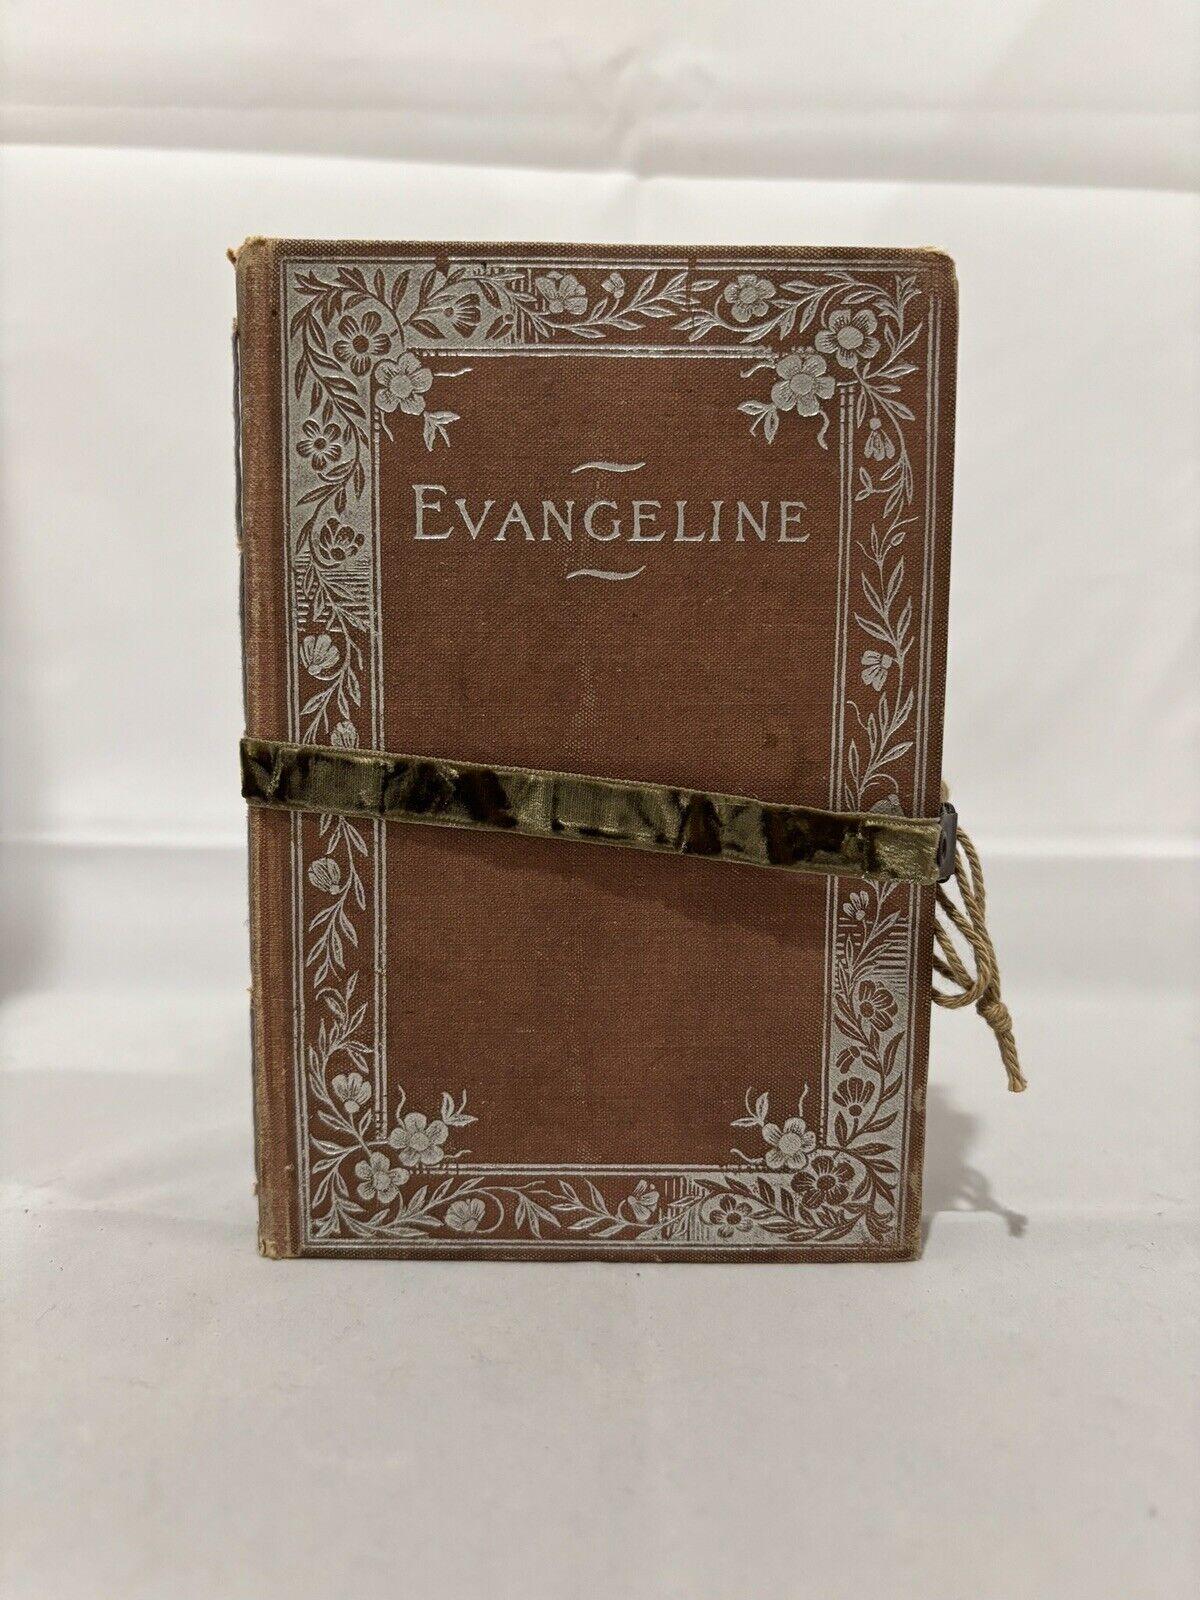 Junk Journal Handmade Vintage, “Evangeline”, Grimoire